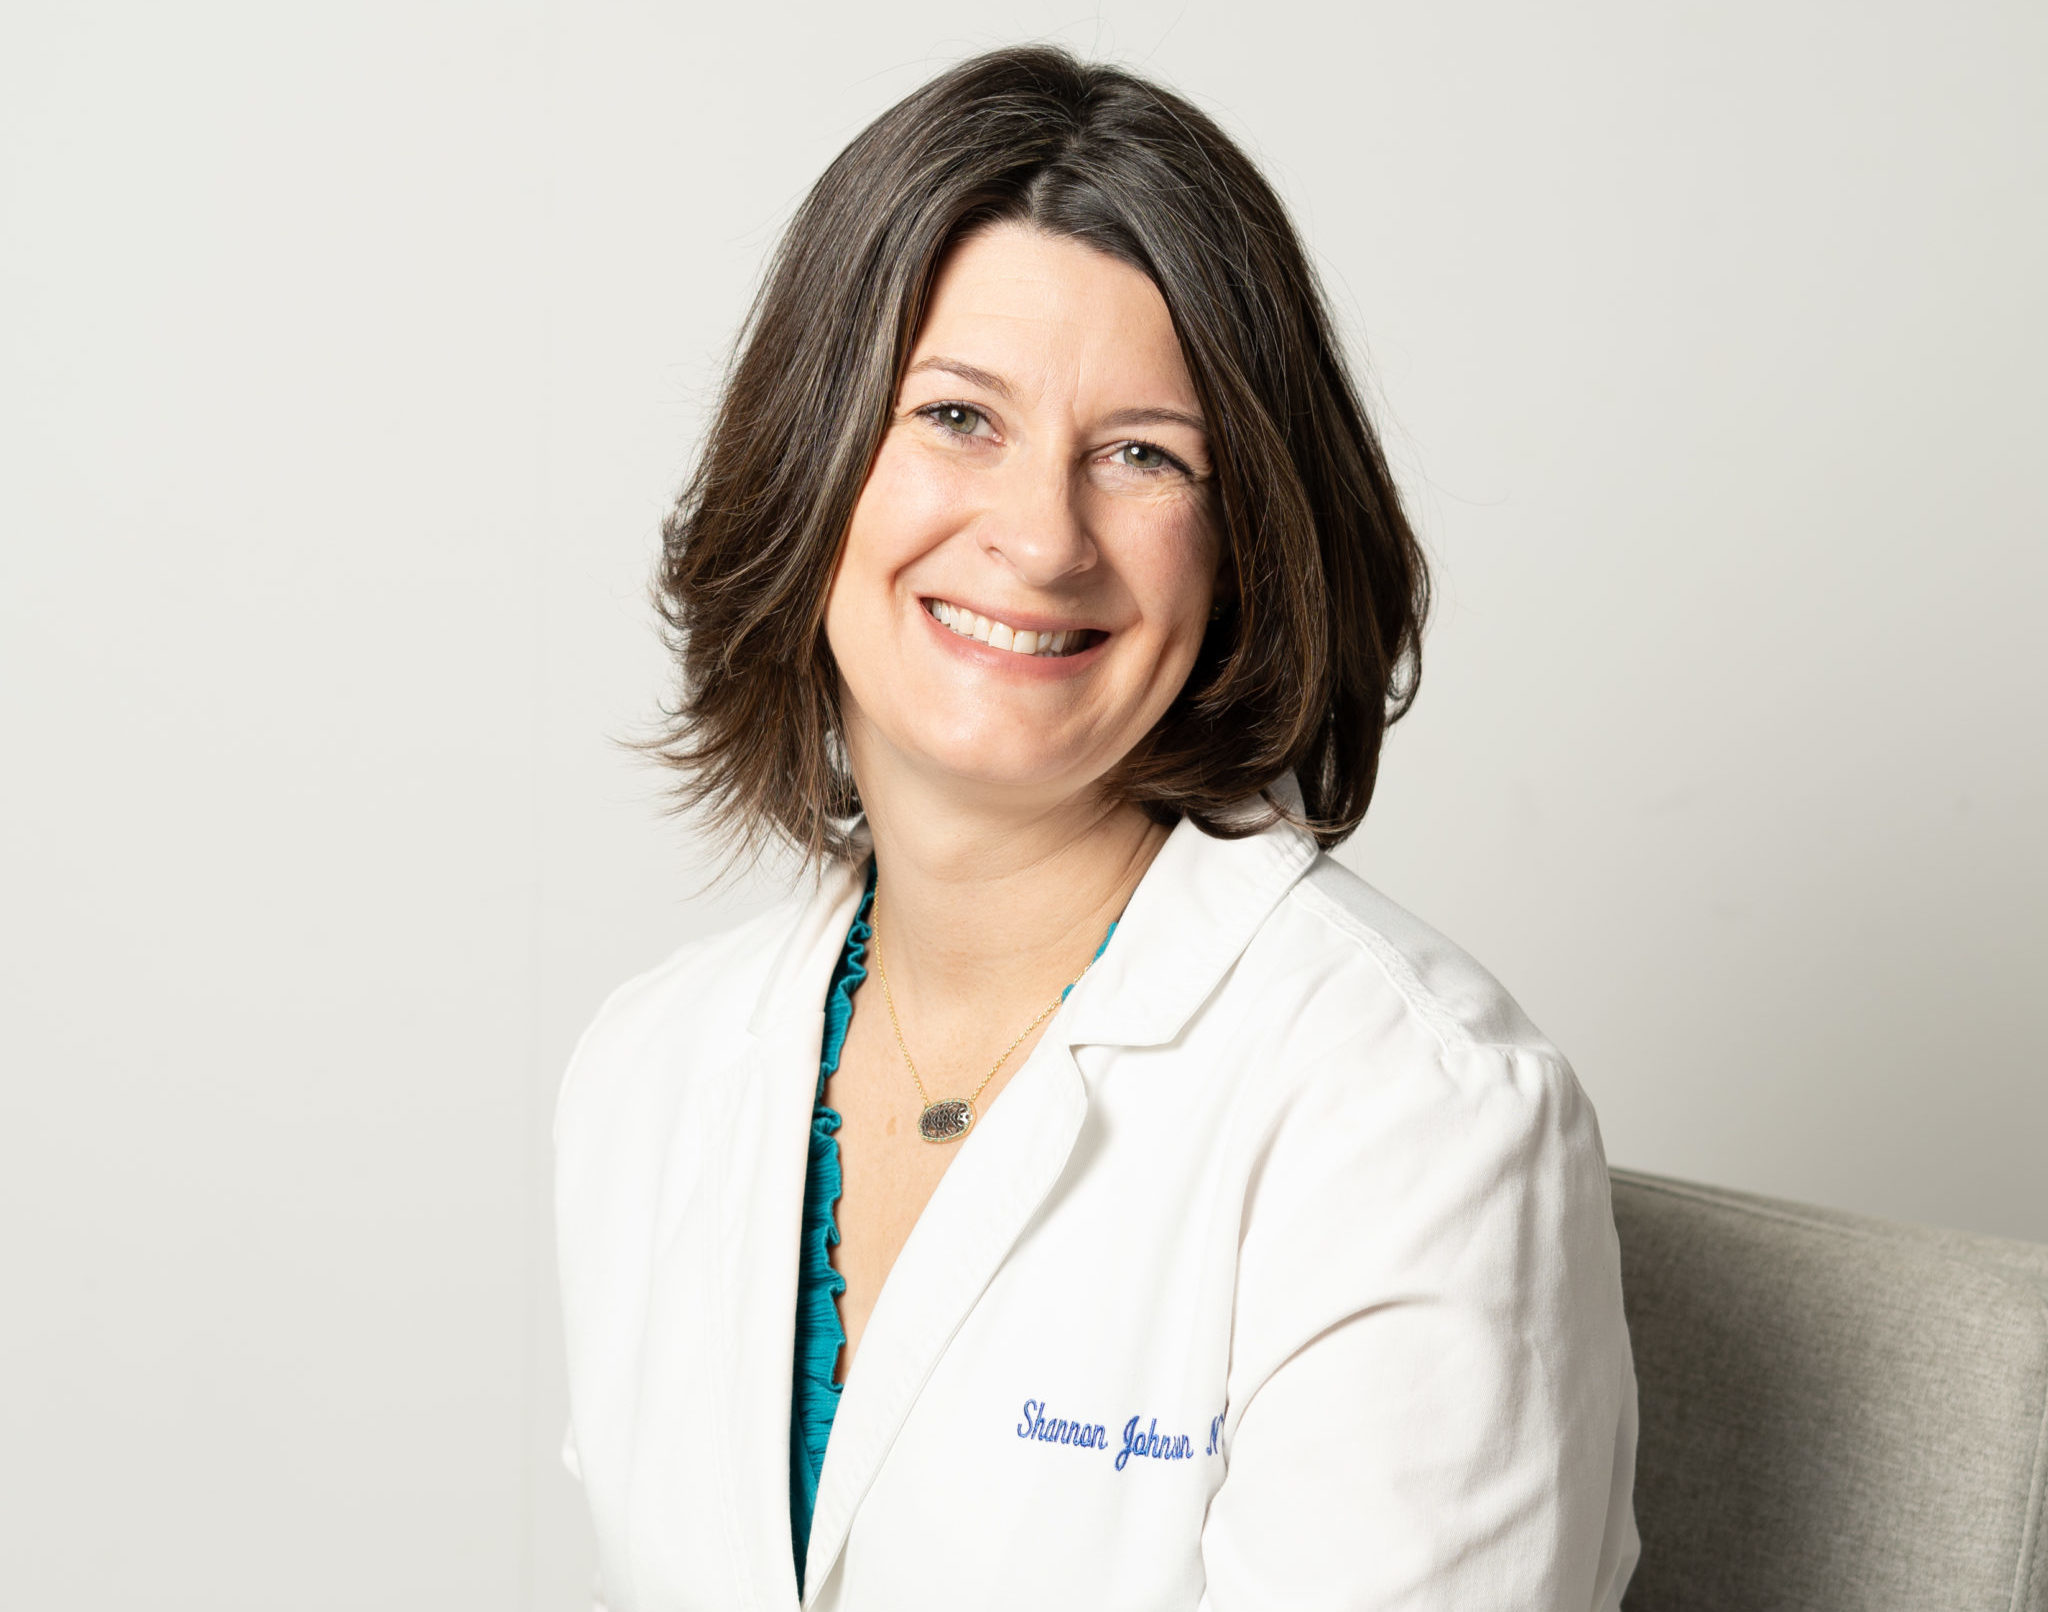 MeridaSKIN Founder Shannon Johnson develops clean clinical rosacea care